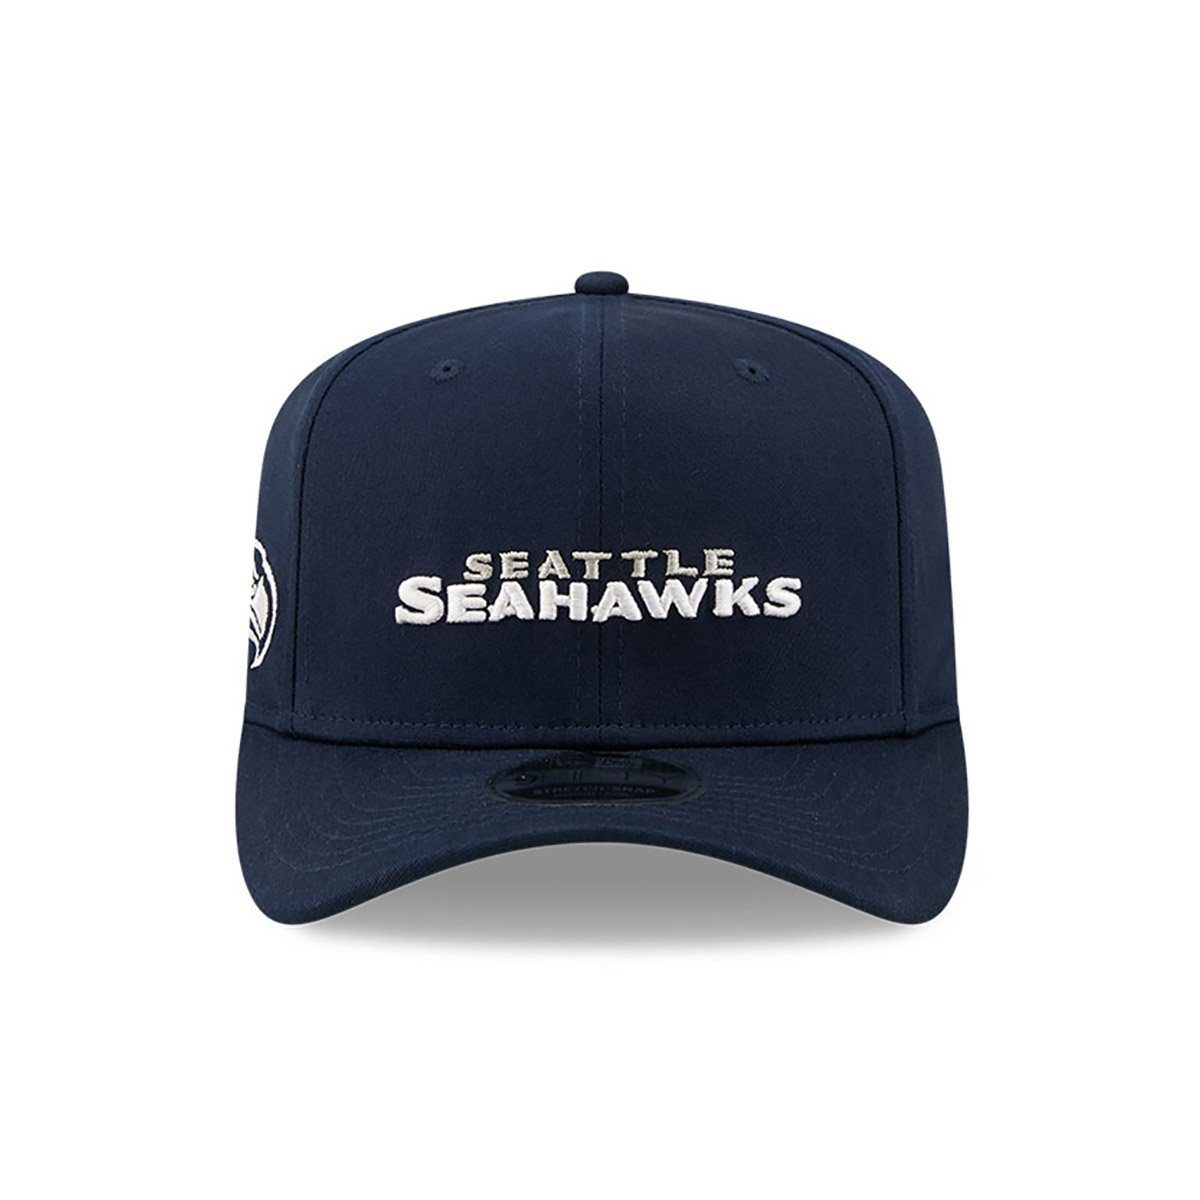 Wordmark New Seahawks navy Cap Cap 9FIFTY New Team Era Baseball Era NFL22 Seattle